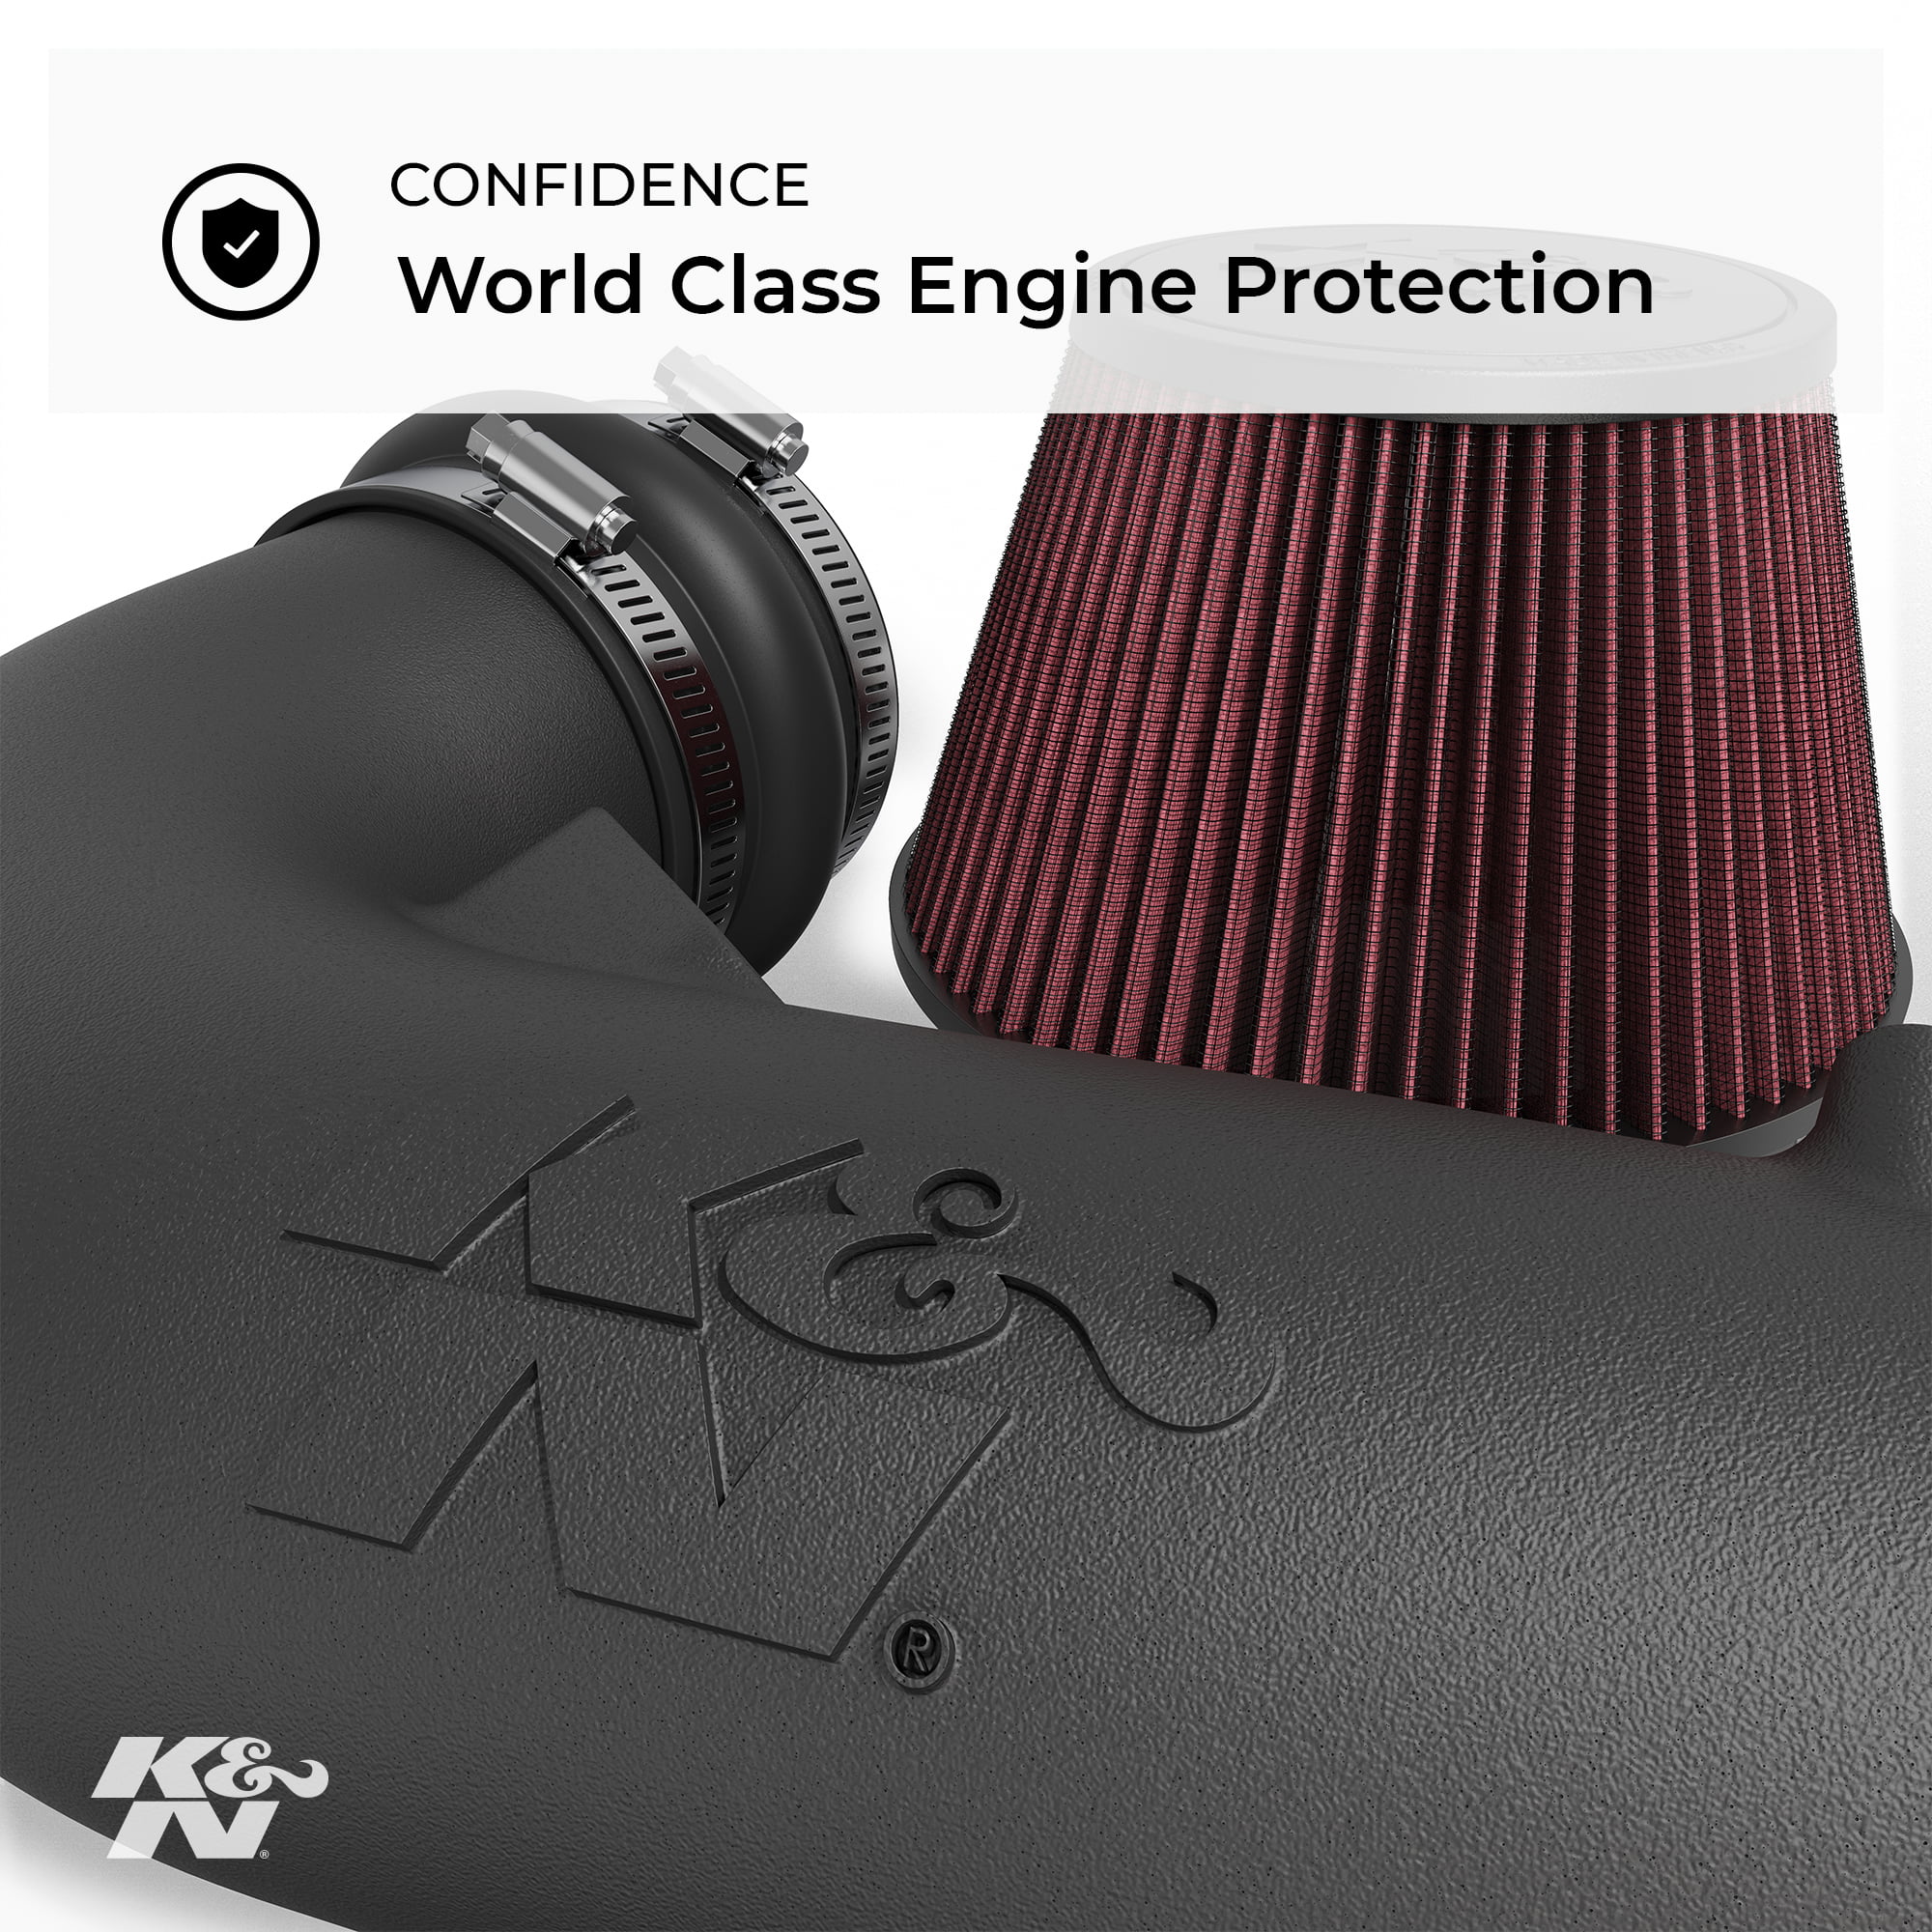 K&N Cold Air Intake Kit: High Performance, Guaranteed to Increase